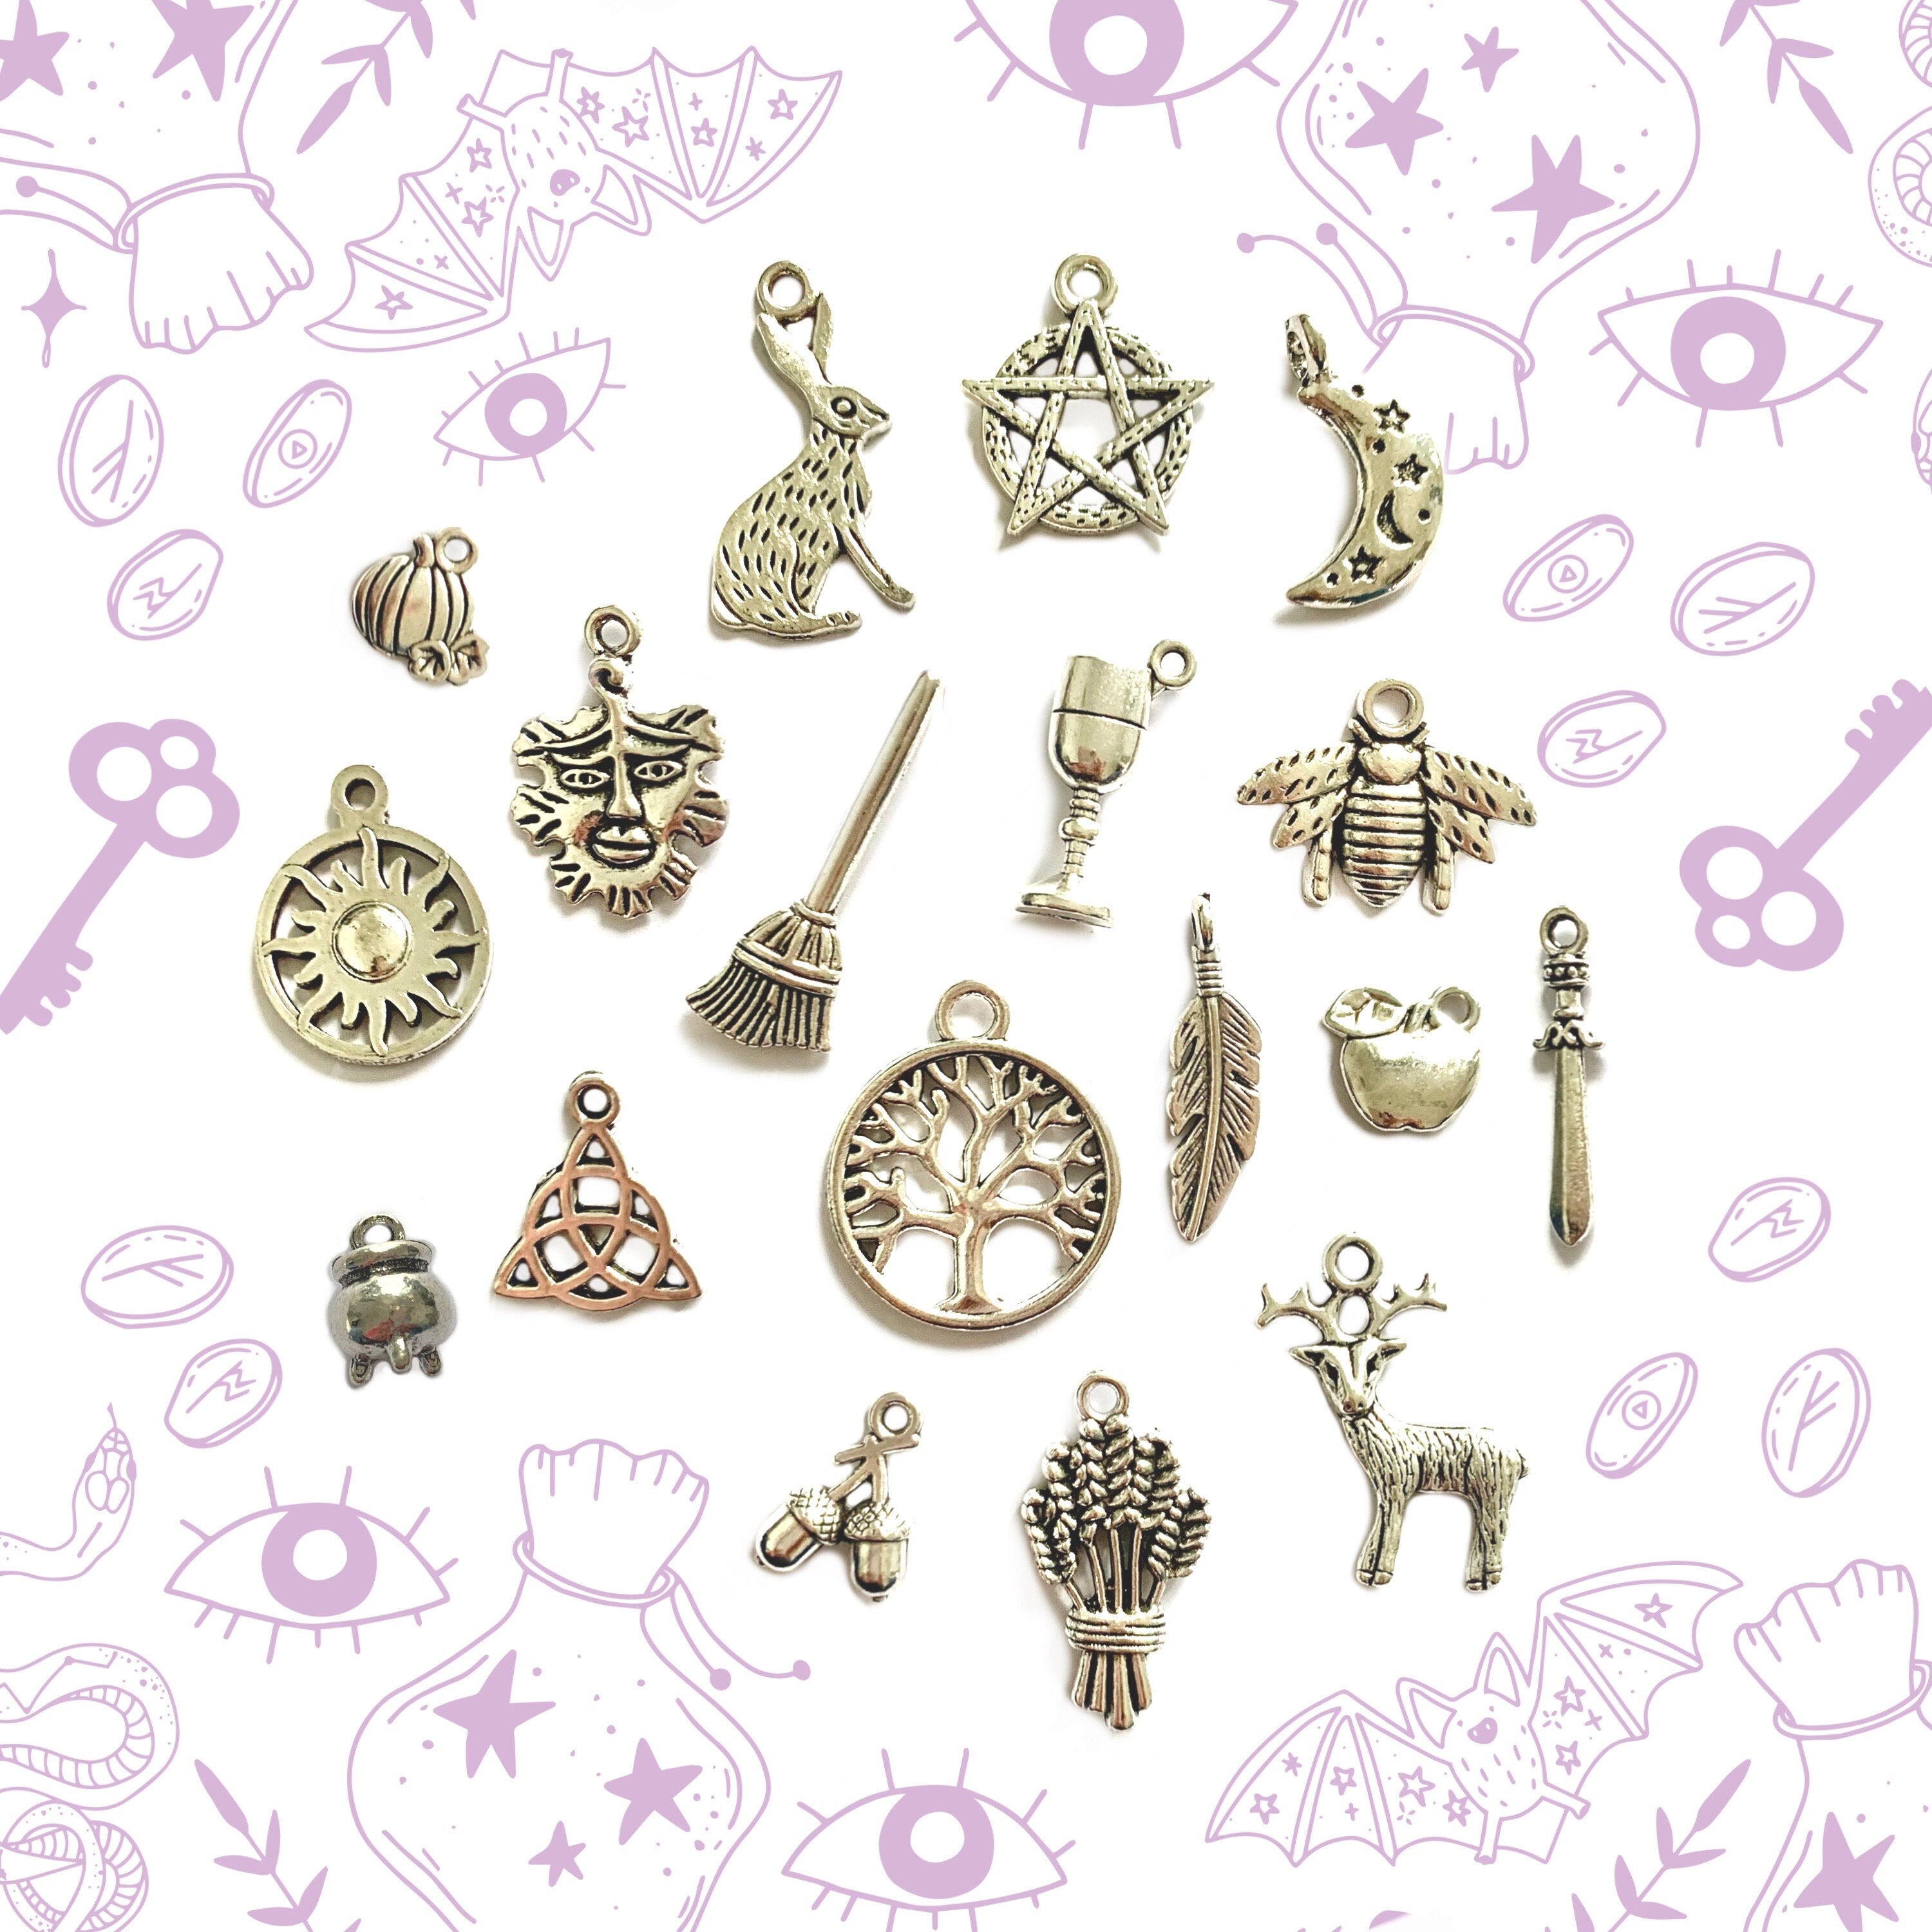 41 X BULK Mixed Pagan Charms, Wholesale Wiccan Silver Pendants Set,  Bracelet Charms, Pentagram Moon Goddess Hare Raven, Jewelry Supplies, UK 